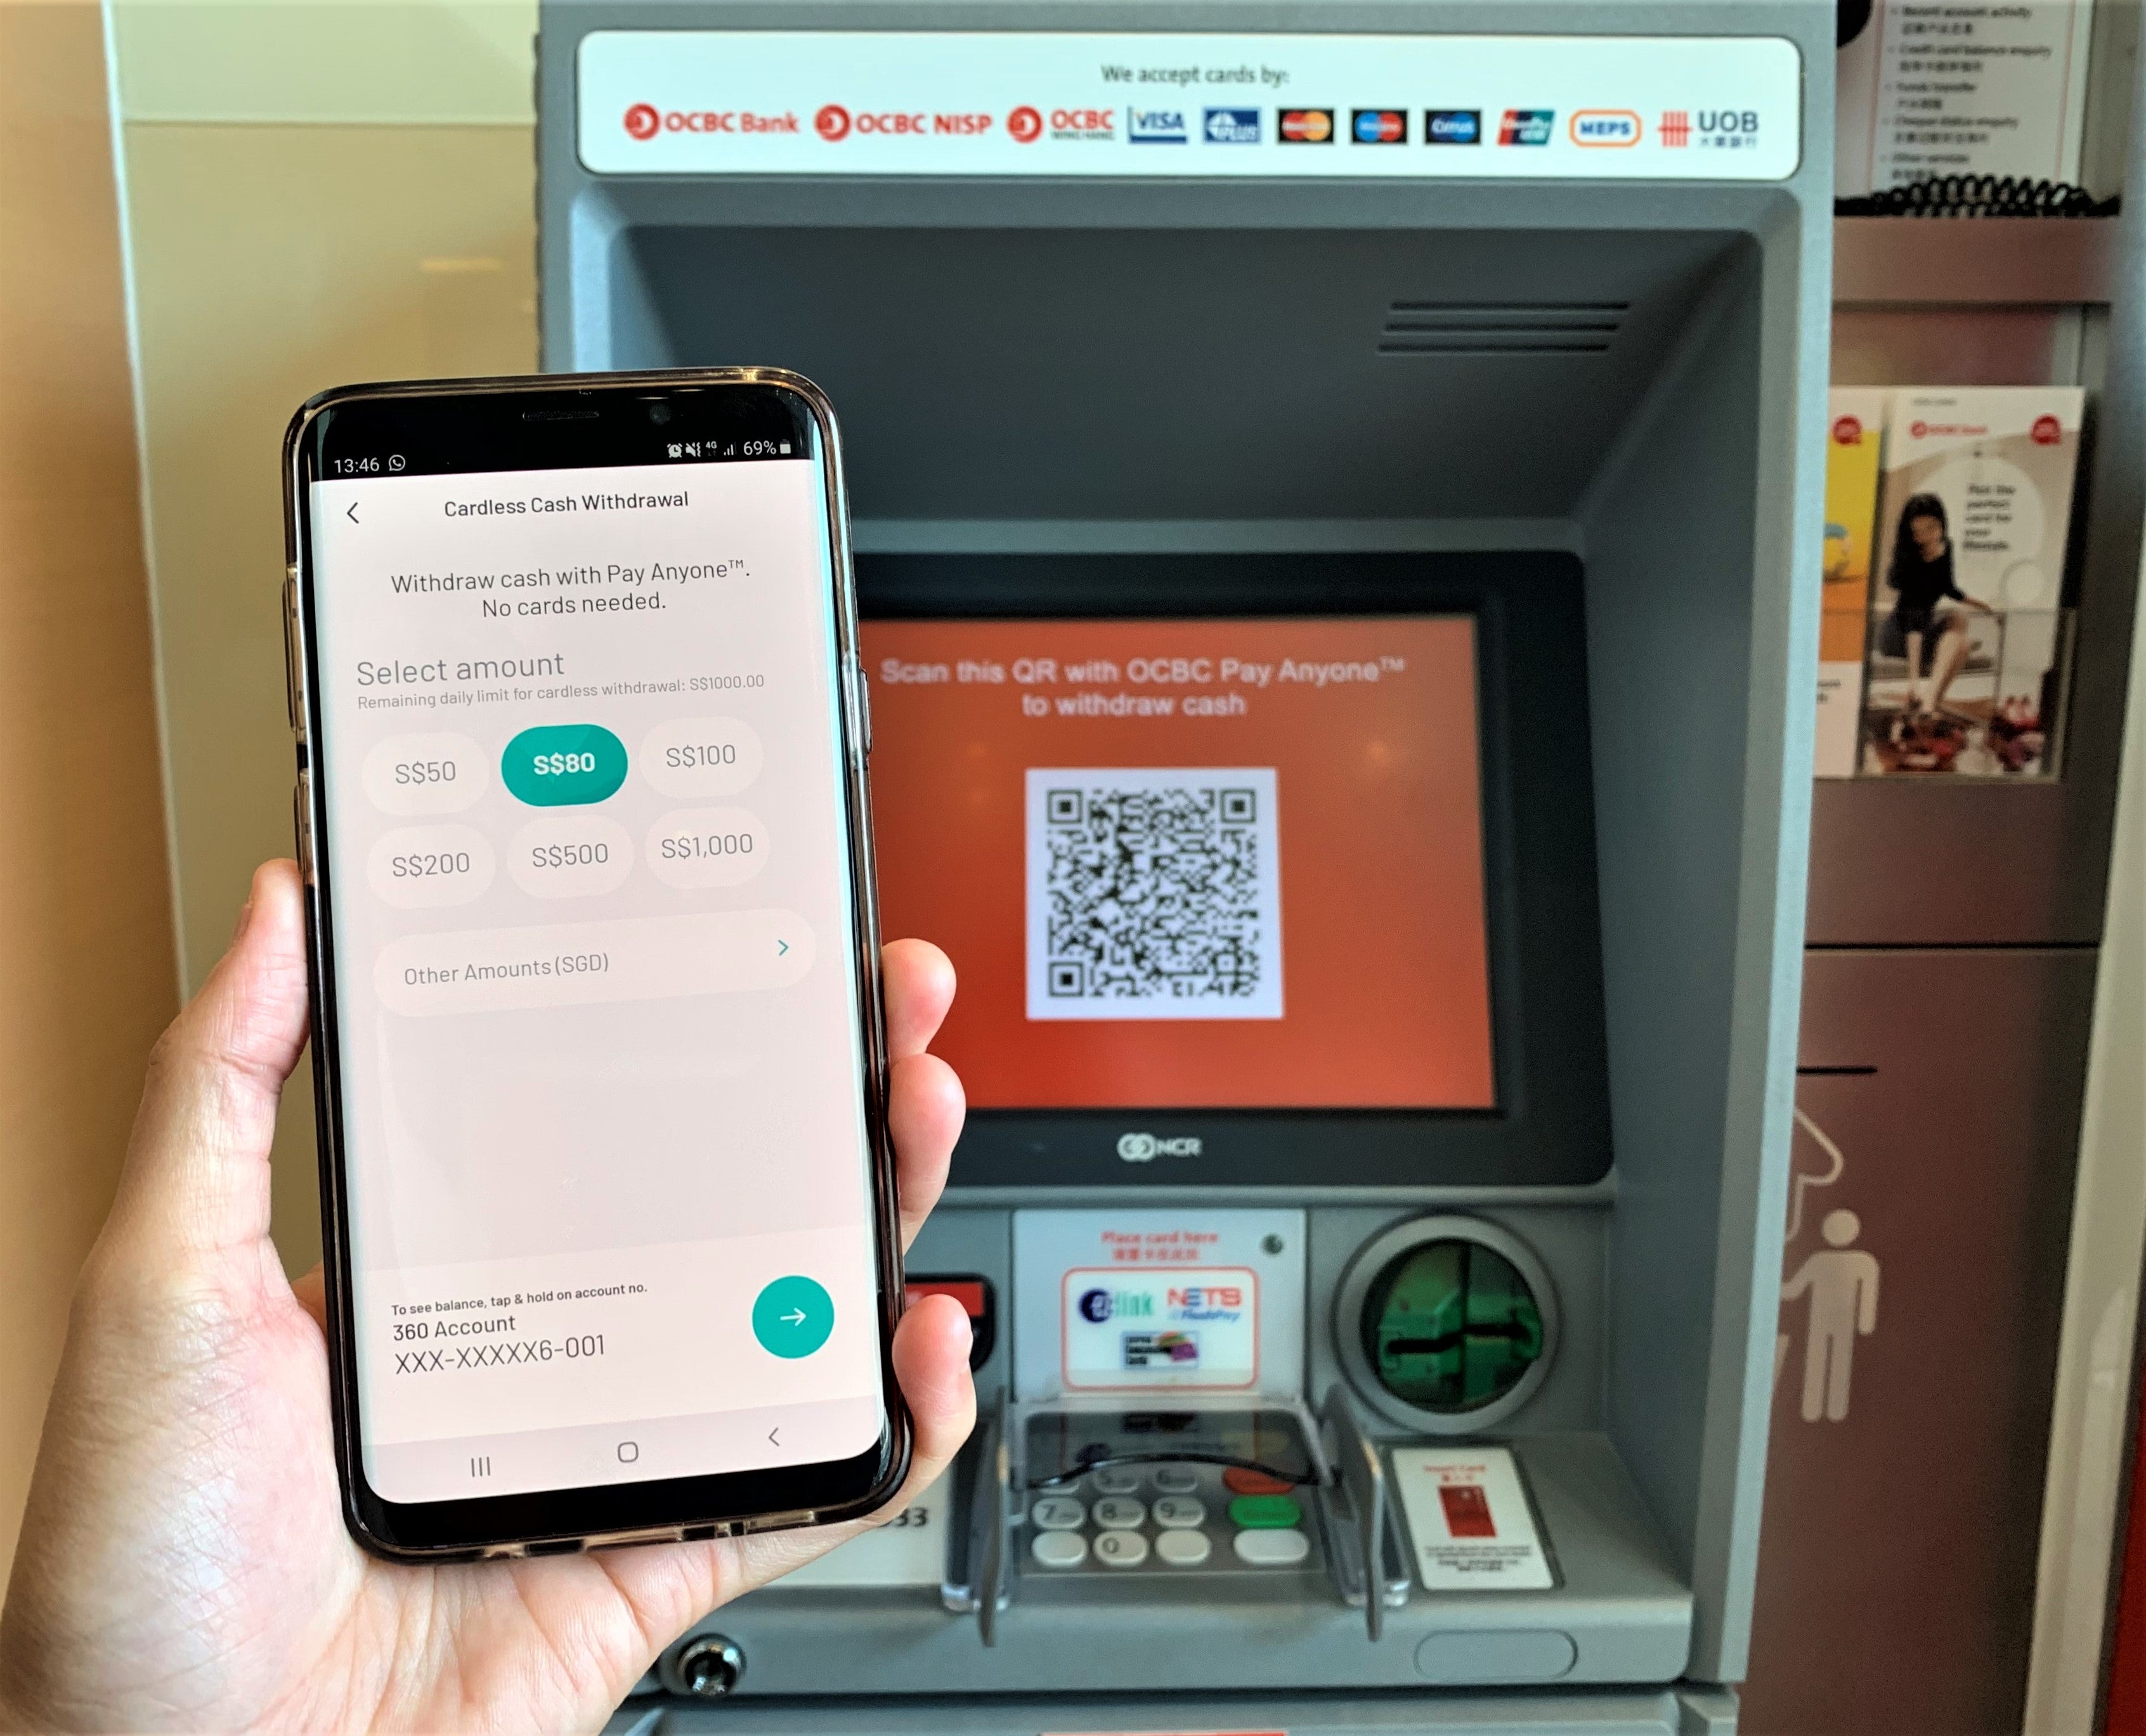 2. "Secret ATM Codes for Unlimited Cash" - wide 2